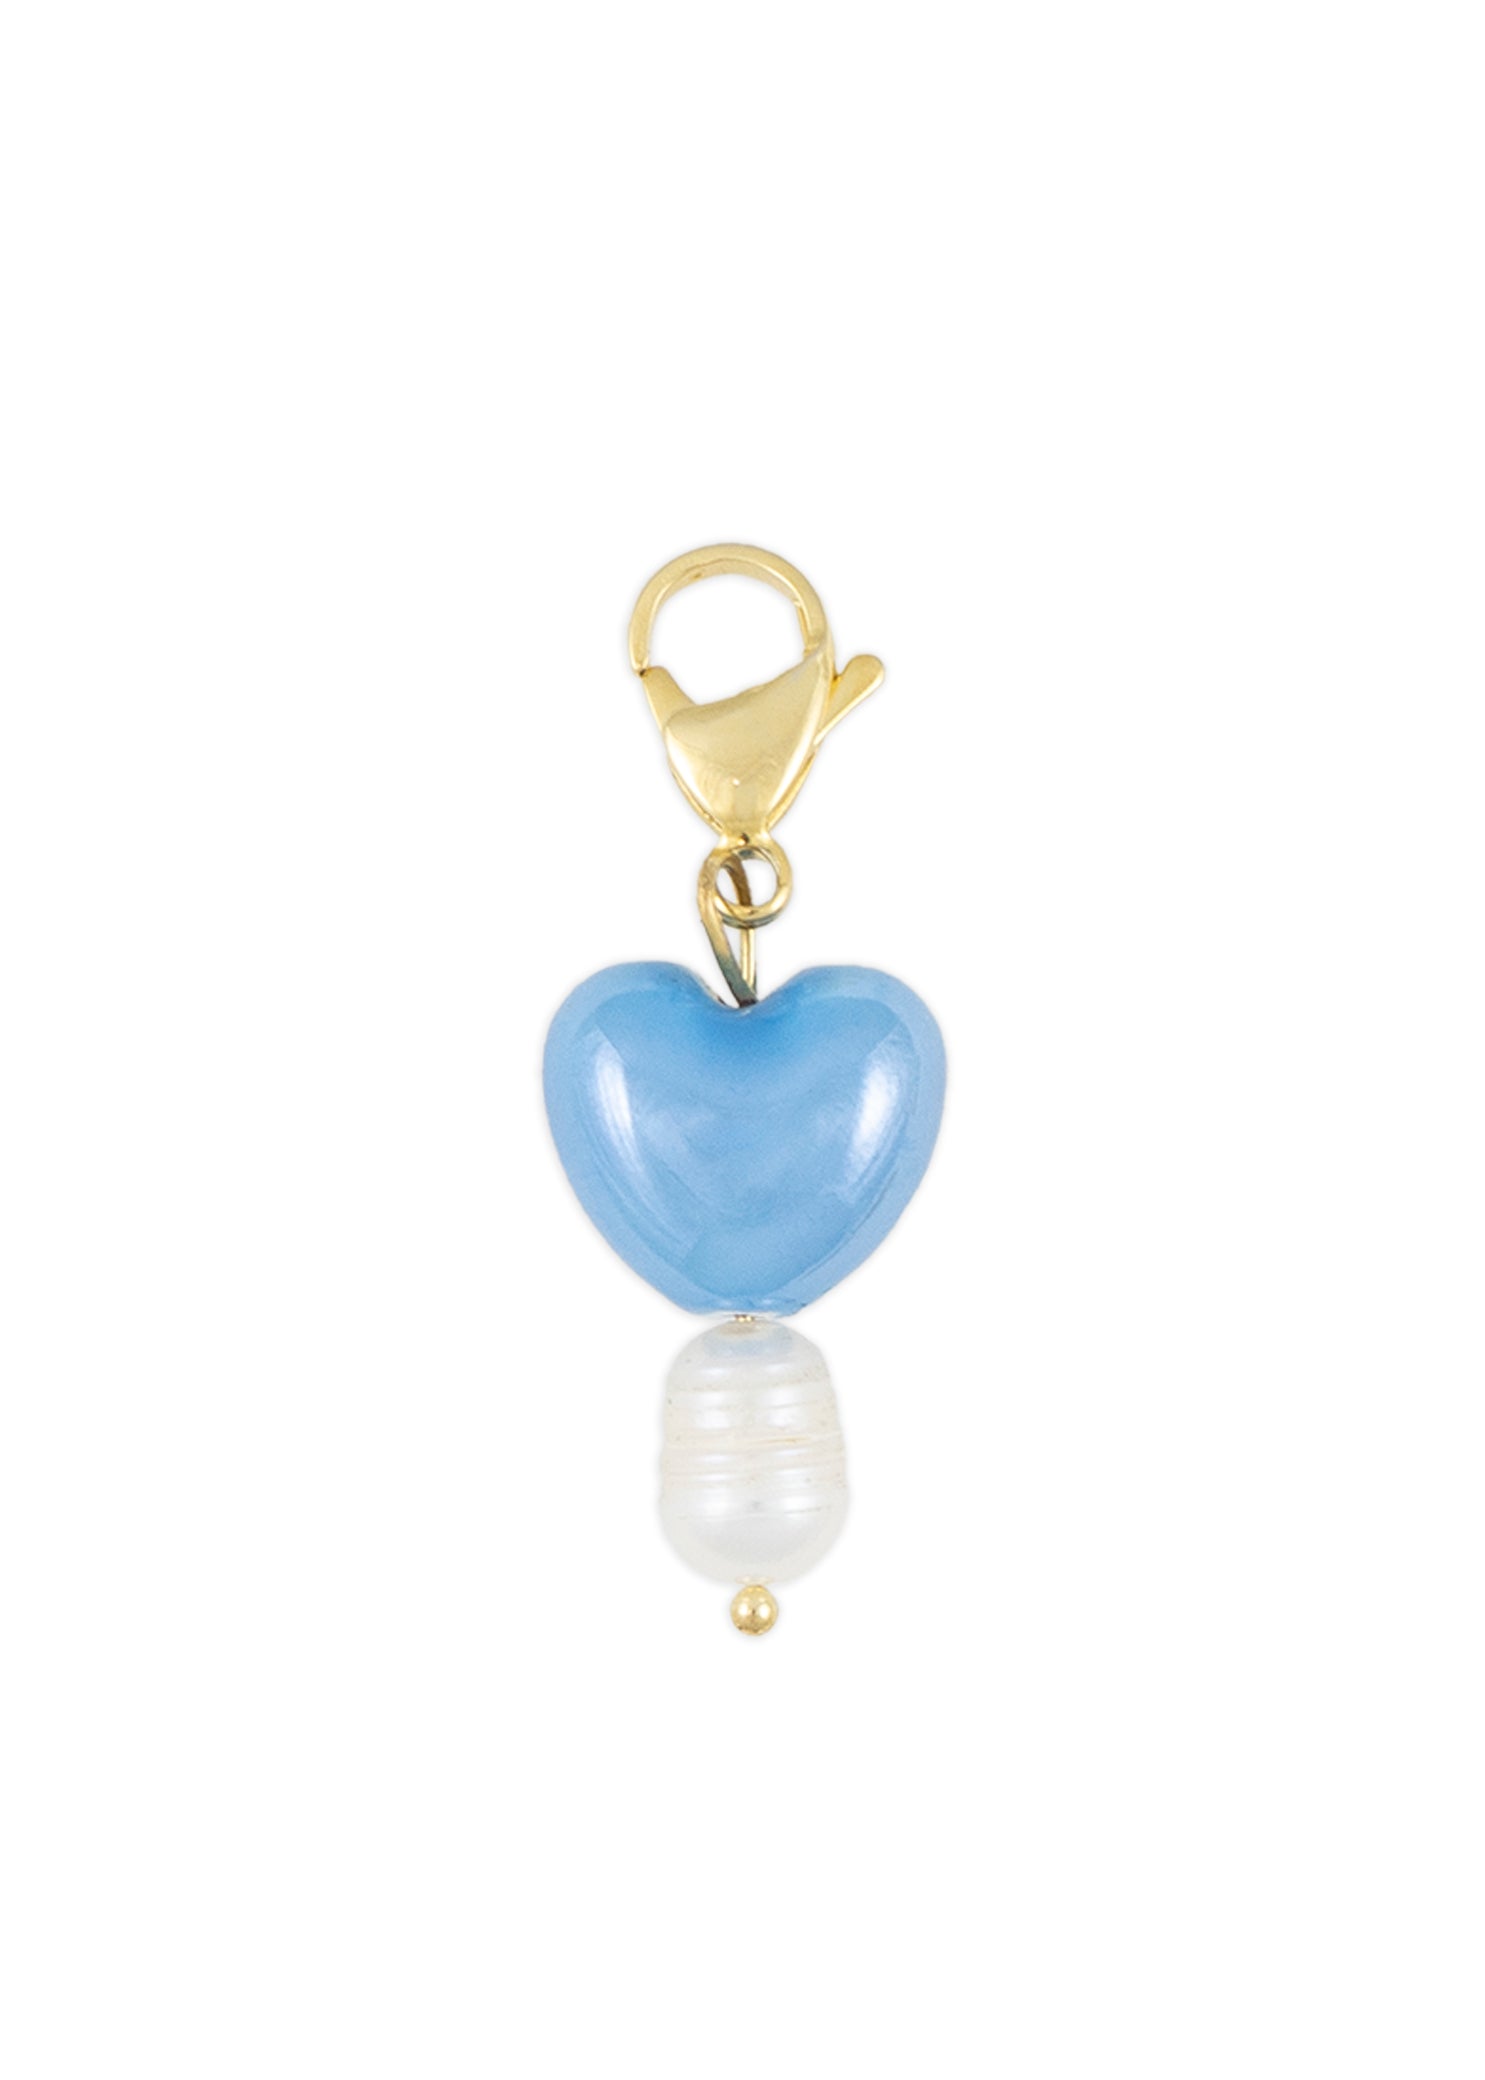 Charm-corazon-azul-perla-ceramica-acero-chapado-oro-18k